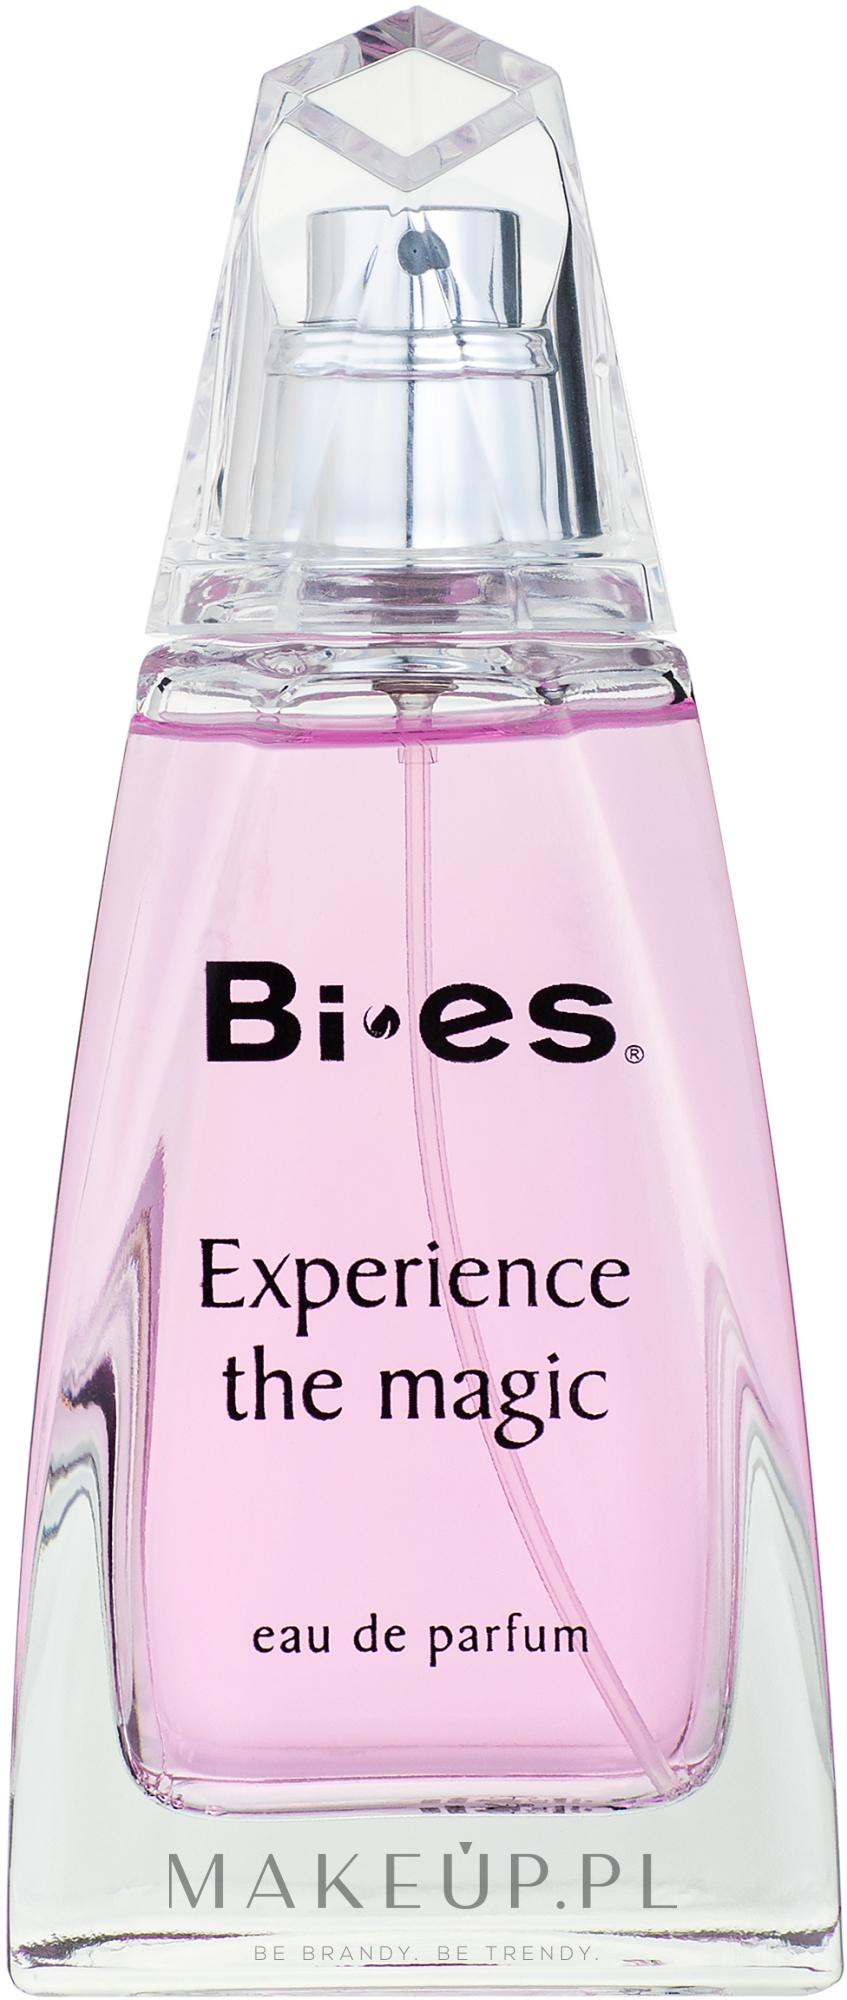 bi-es experience the magic